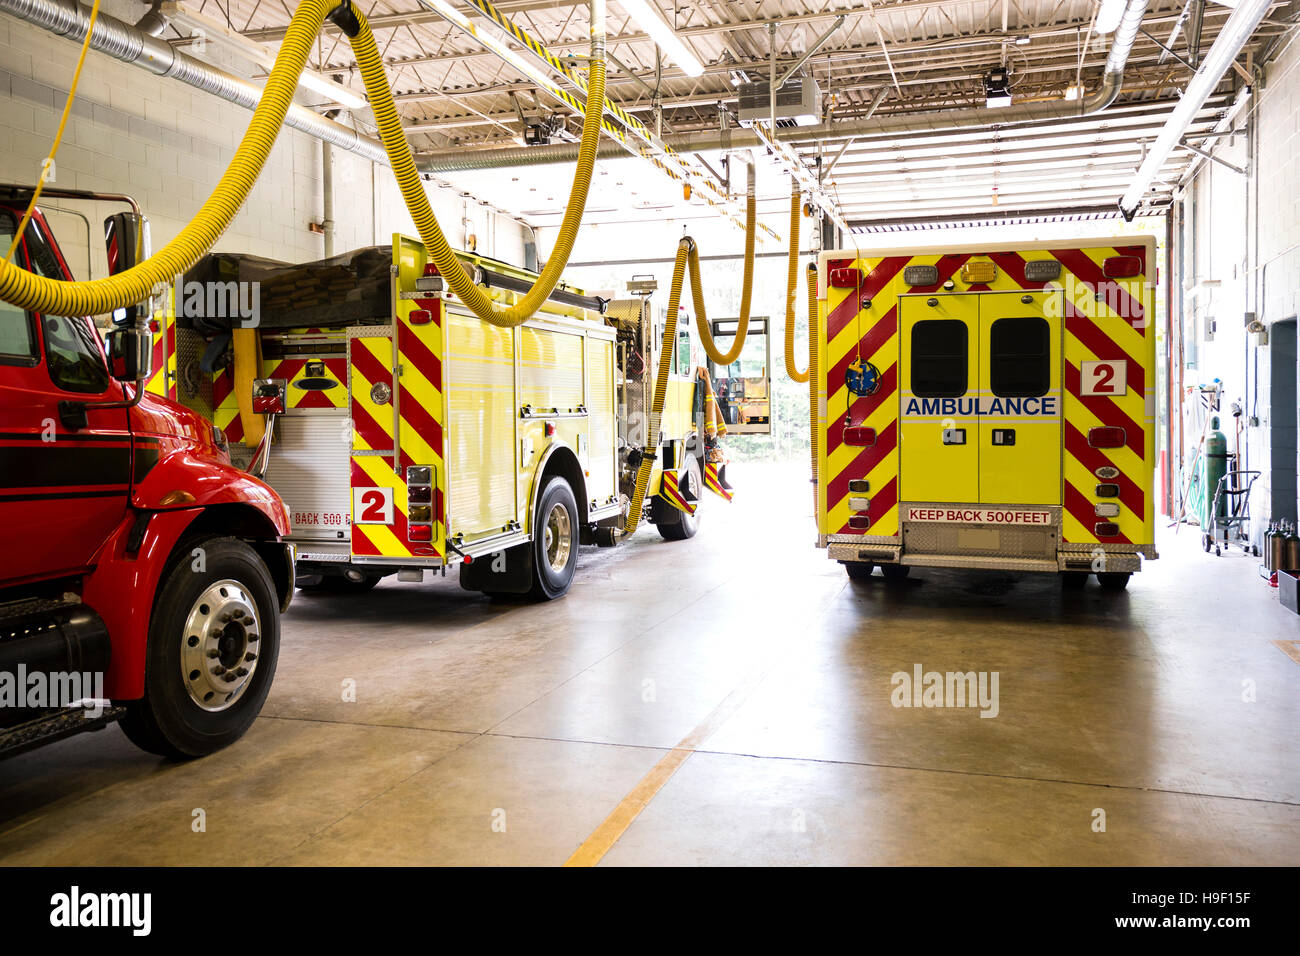 Fire trucks in fire station Stock Photo